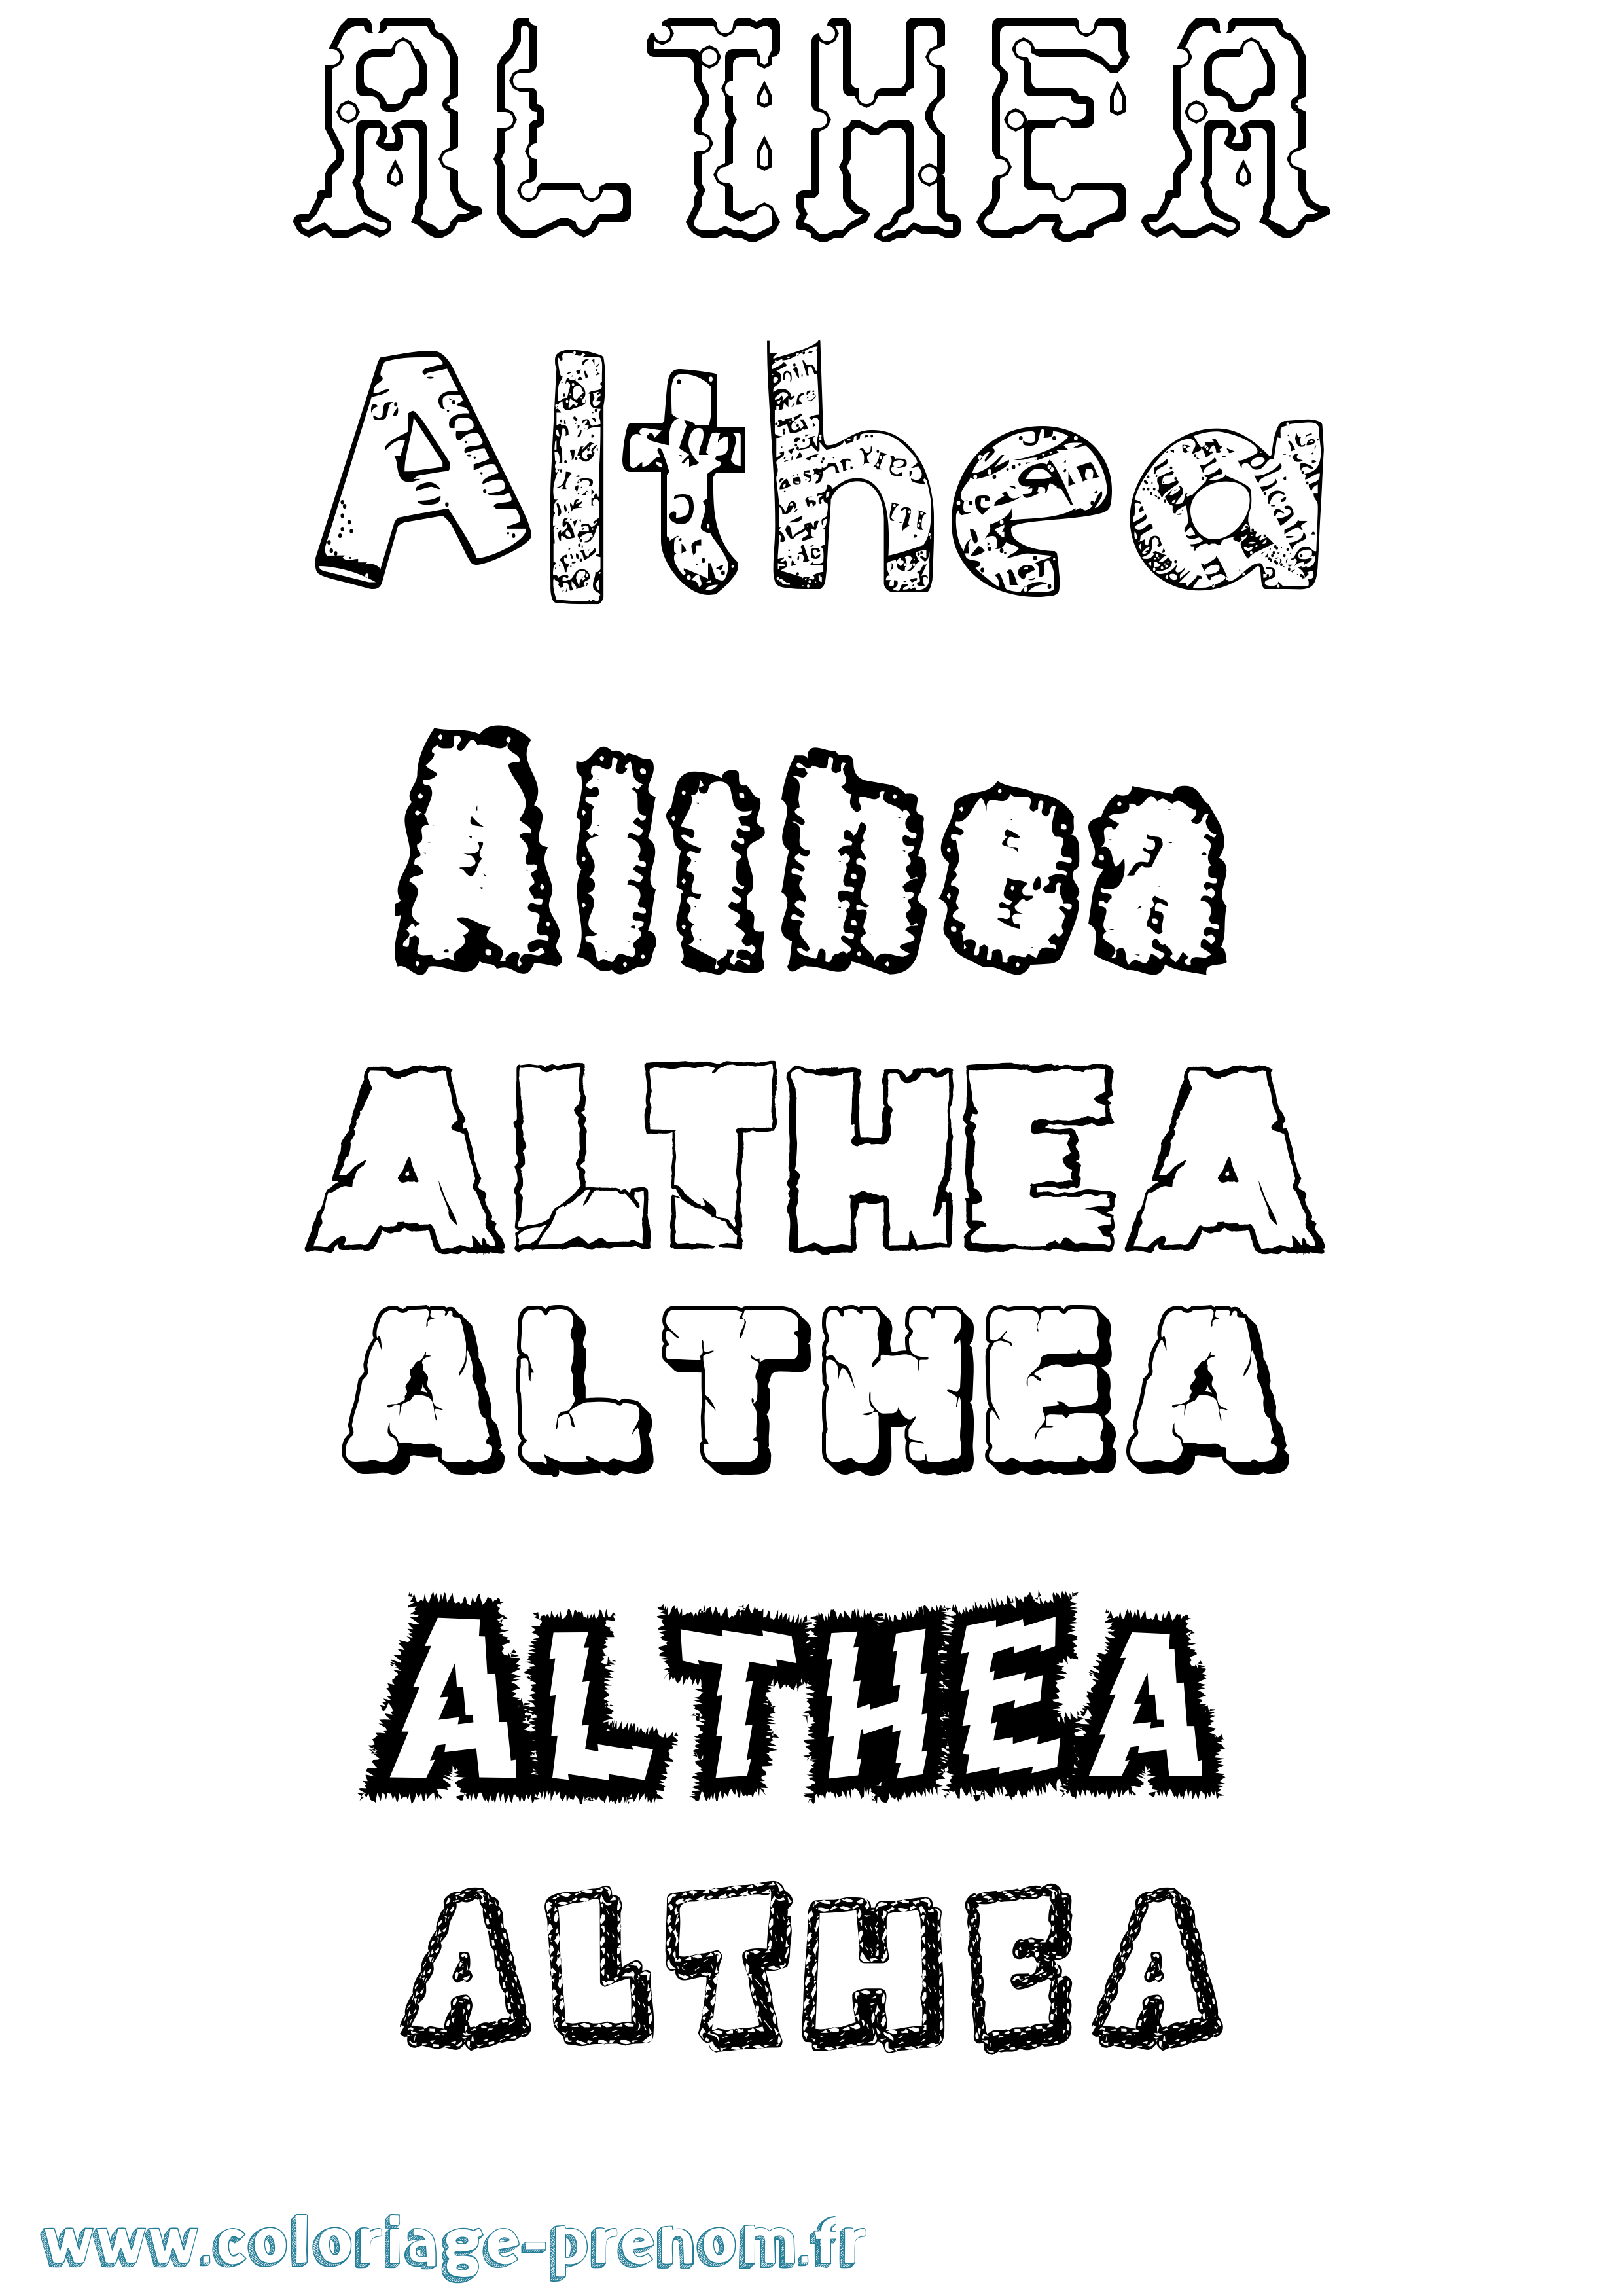 Coloriage prénom Althea Destructuré